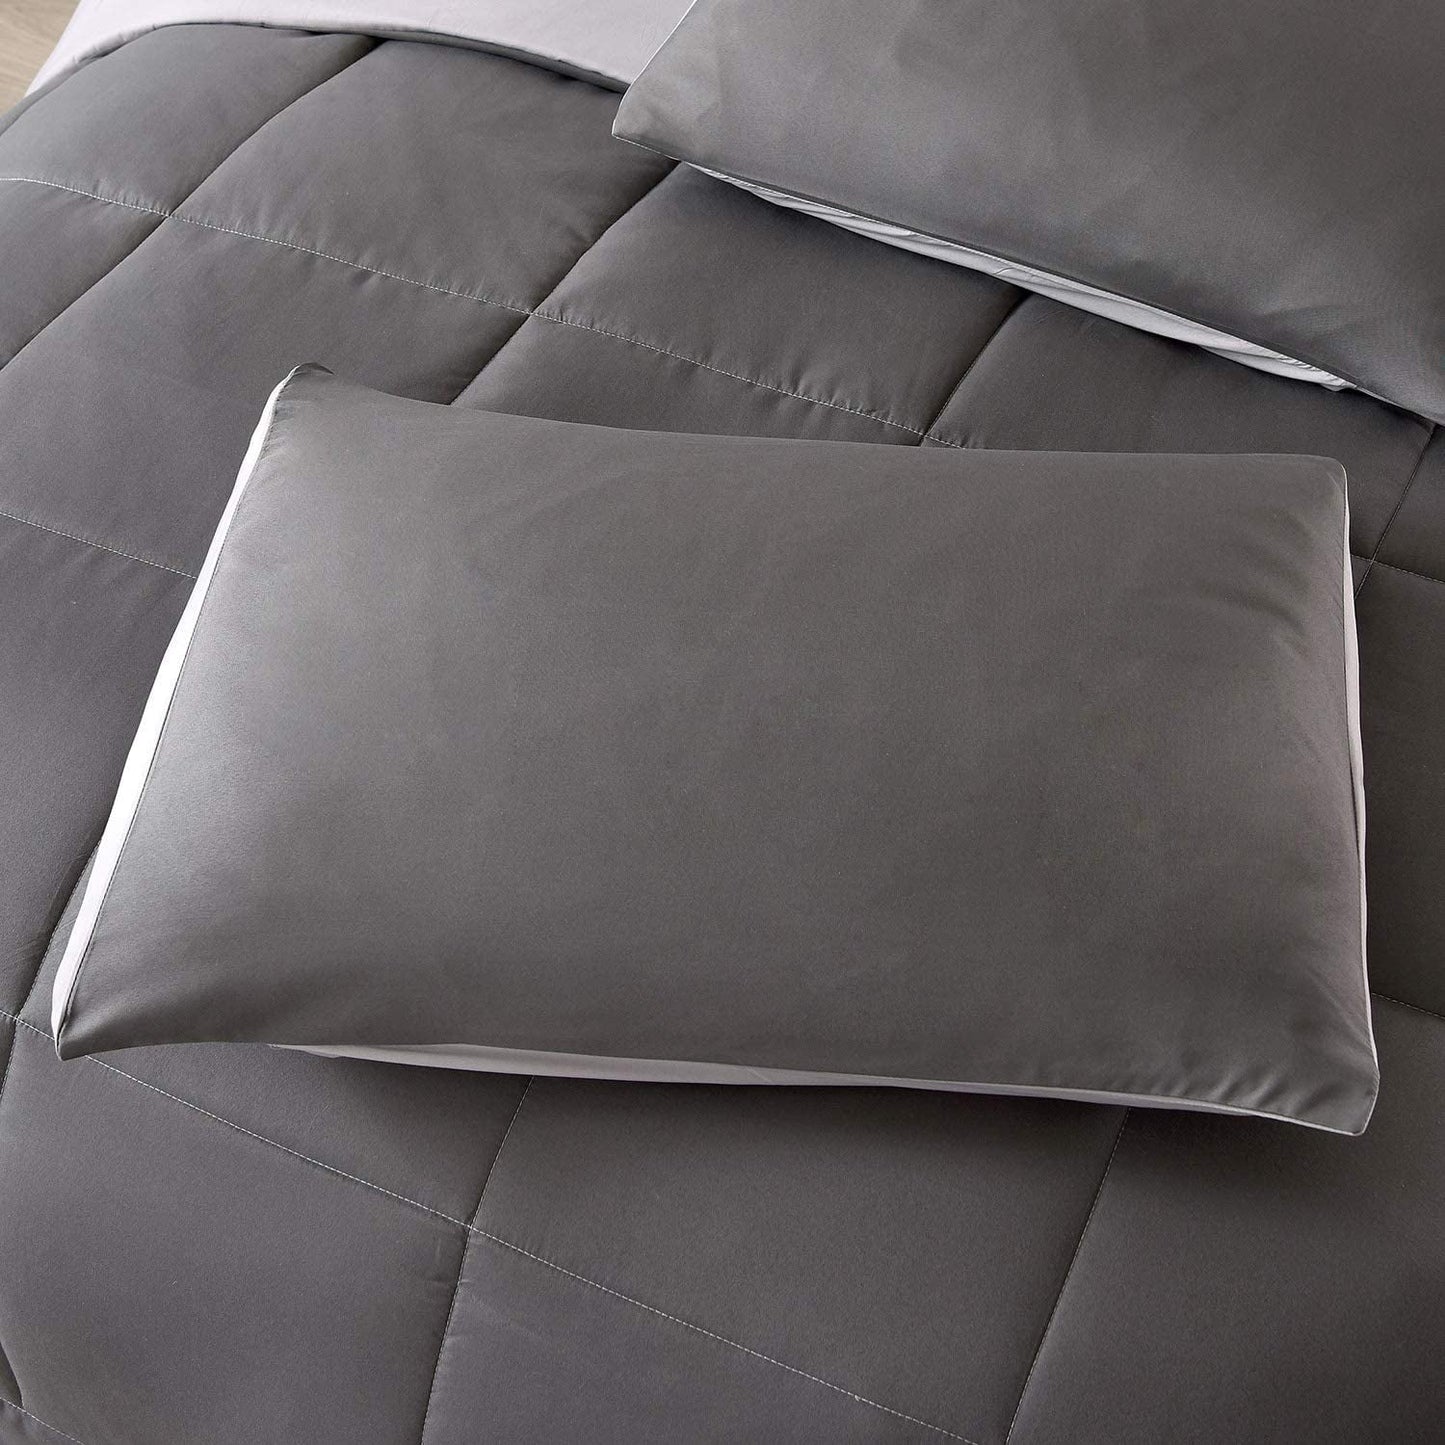 Exclusivo Mezcla Lightweight Reversible 2-Piece Comforter Set All Seasons, Down Alternative Comforter with 1 Pillow Sham, Twin Size, Grey